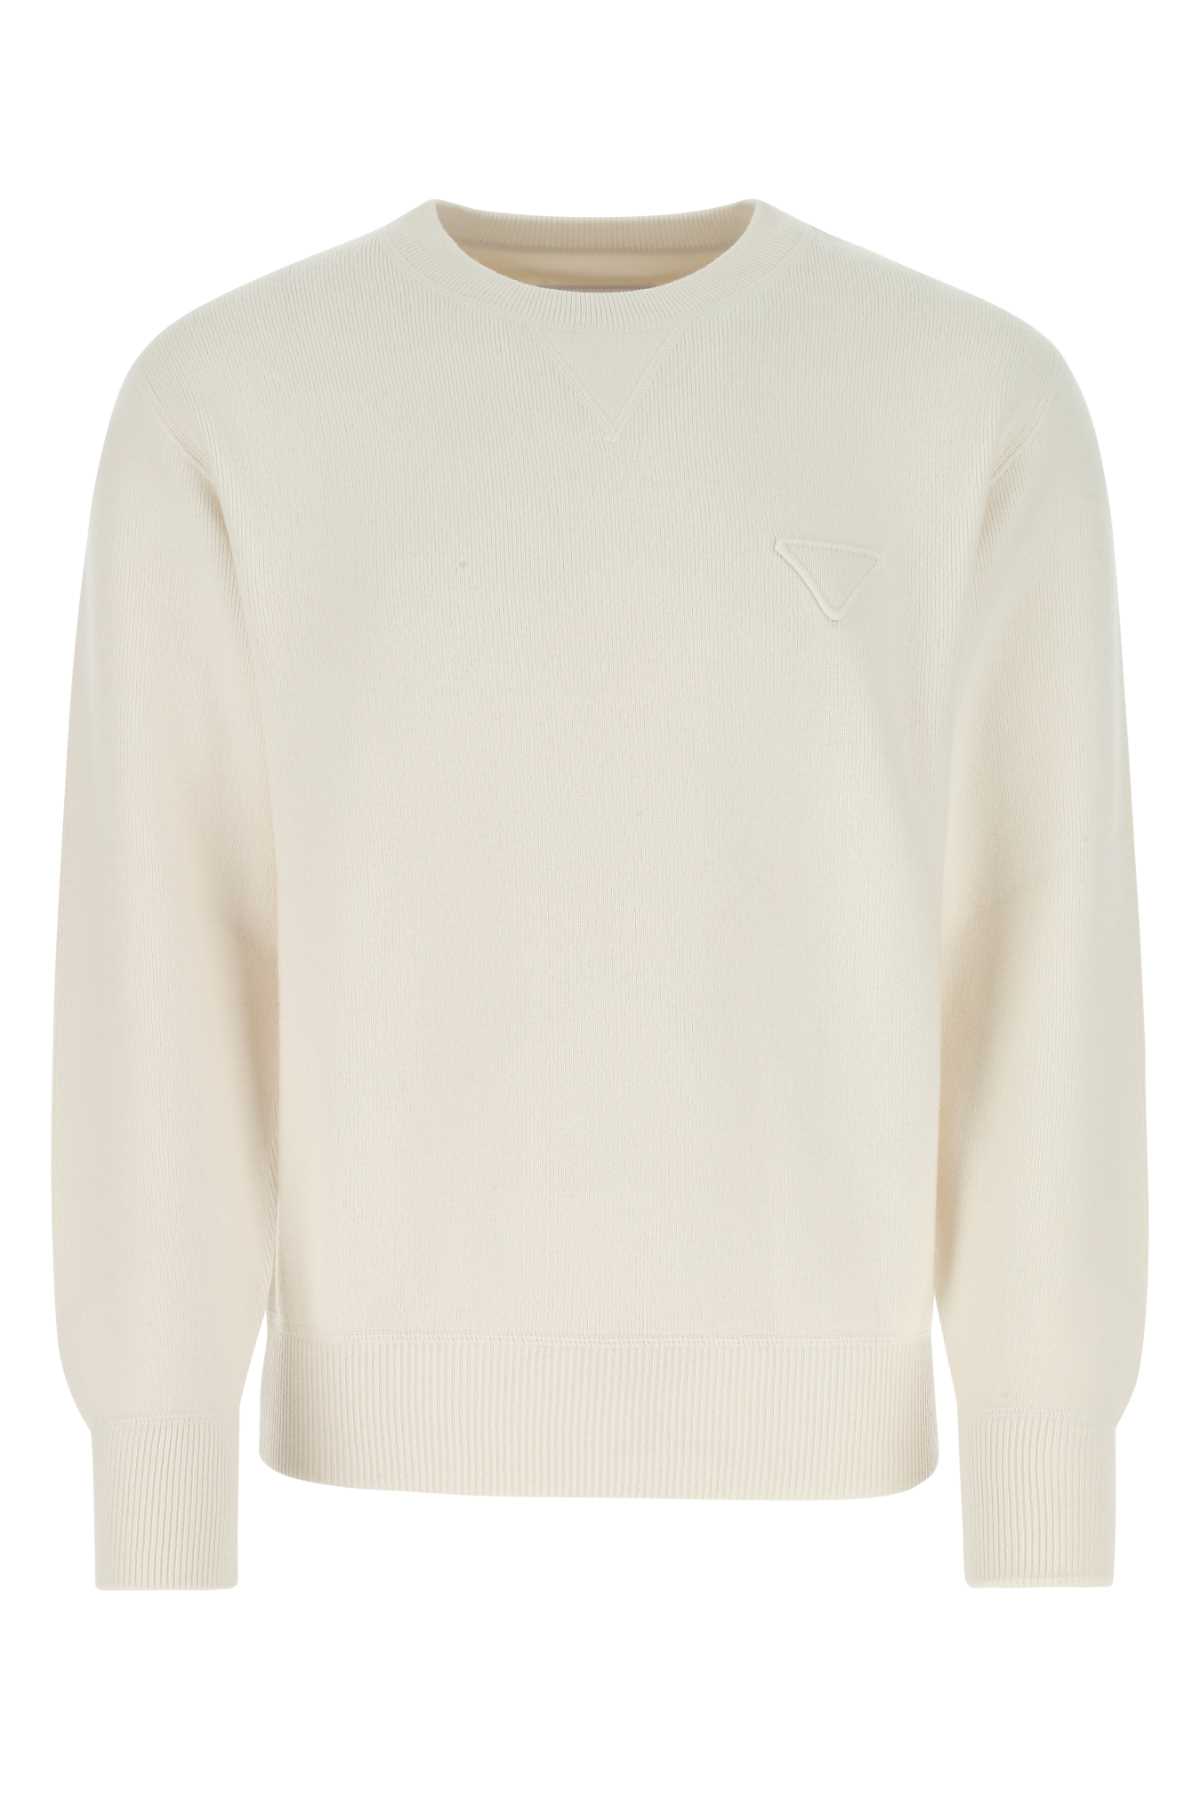 Ivory Stretch Cashmere Blend Sweater